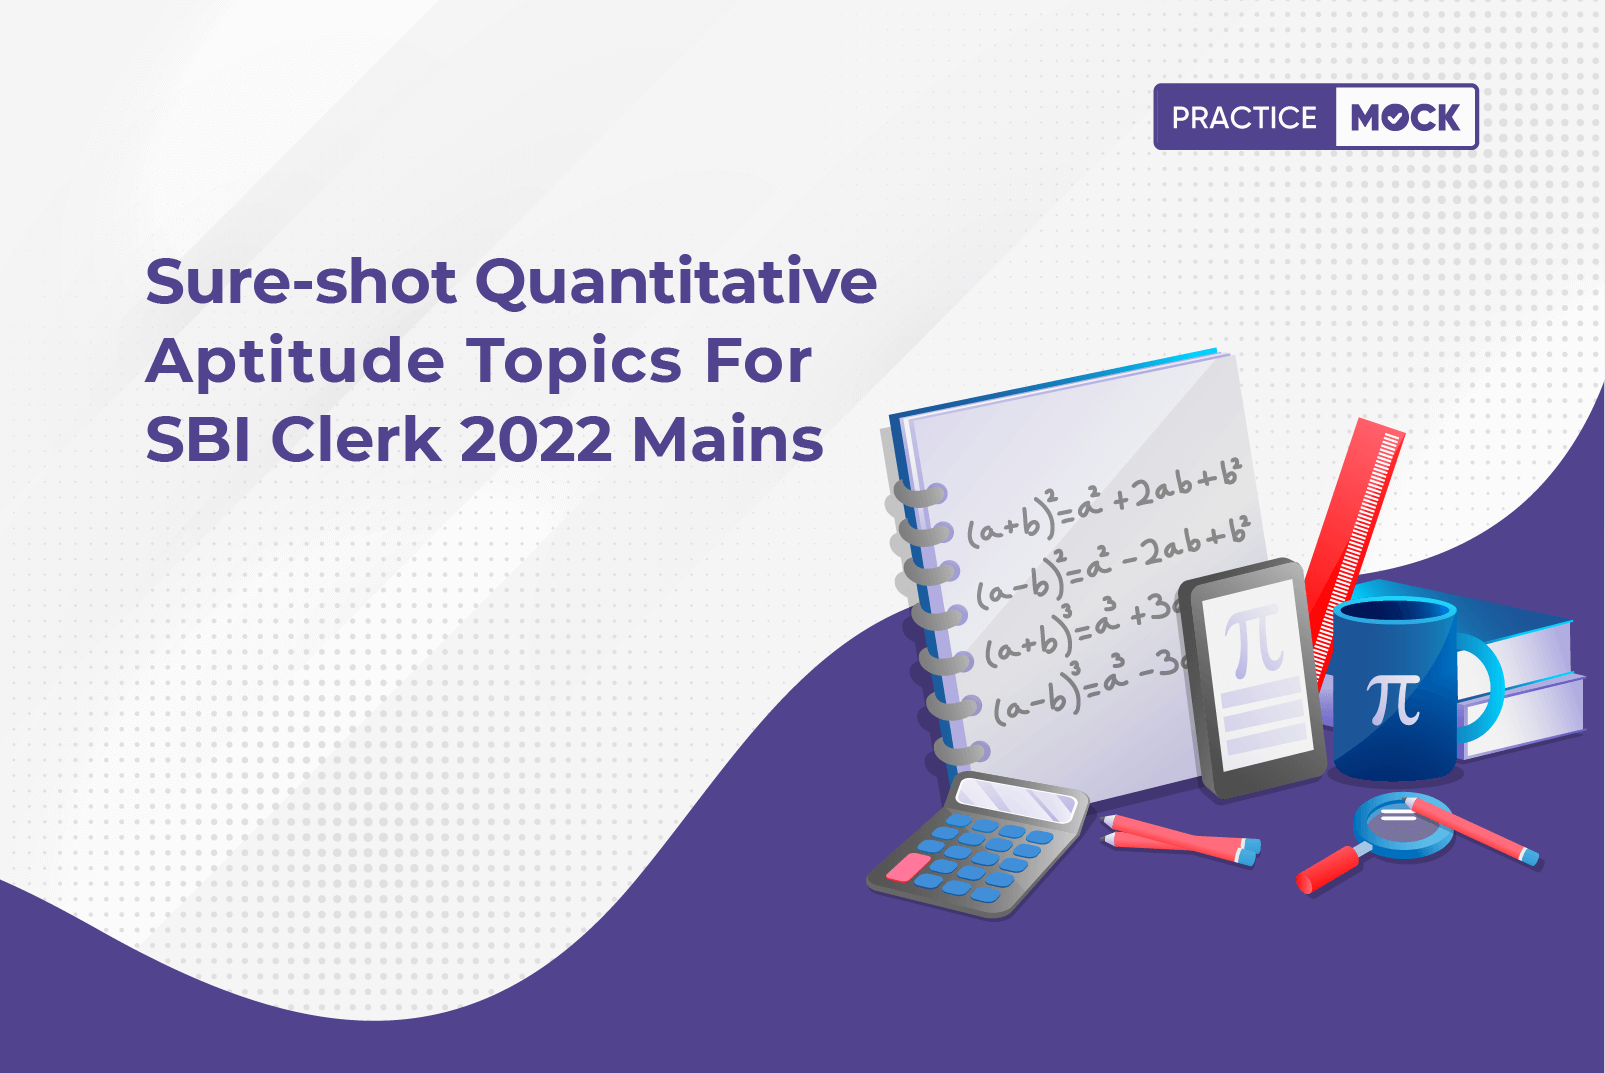 Sure-shot Quantitative Aptitude Topics for SBI Clerk 2022 Mains